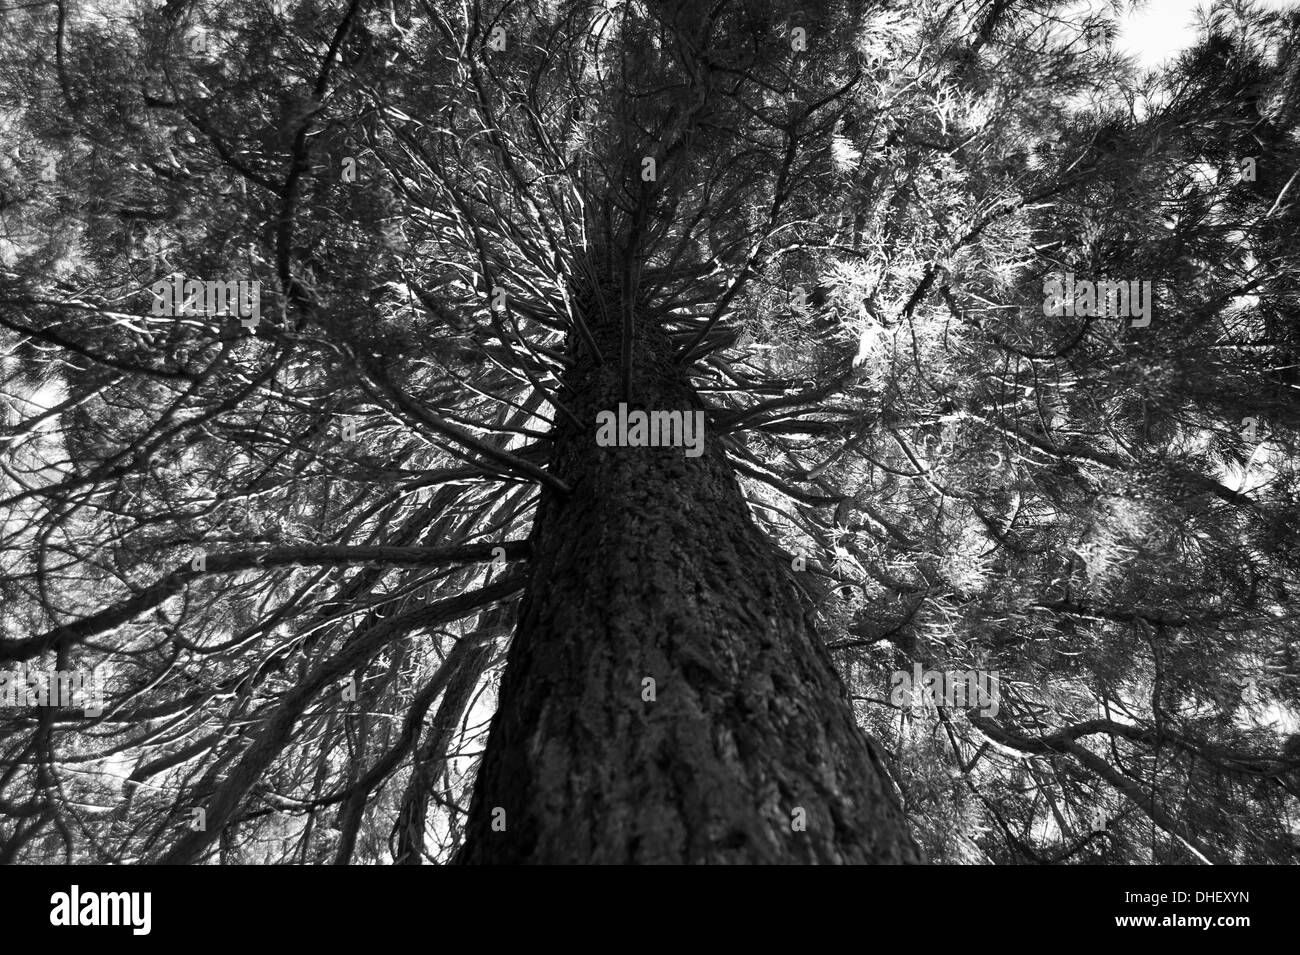 Media Photo Call - Wellingtonia Sierra Redwood Baumstamm aus Kalifornien USA Sequoiadendron gigateum bei Wakehurst UK Stockfoto